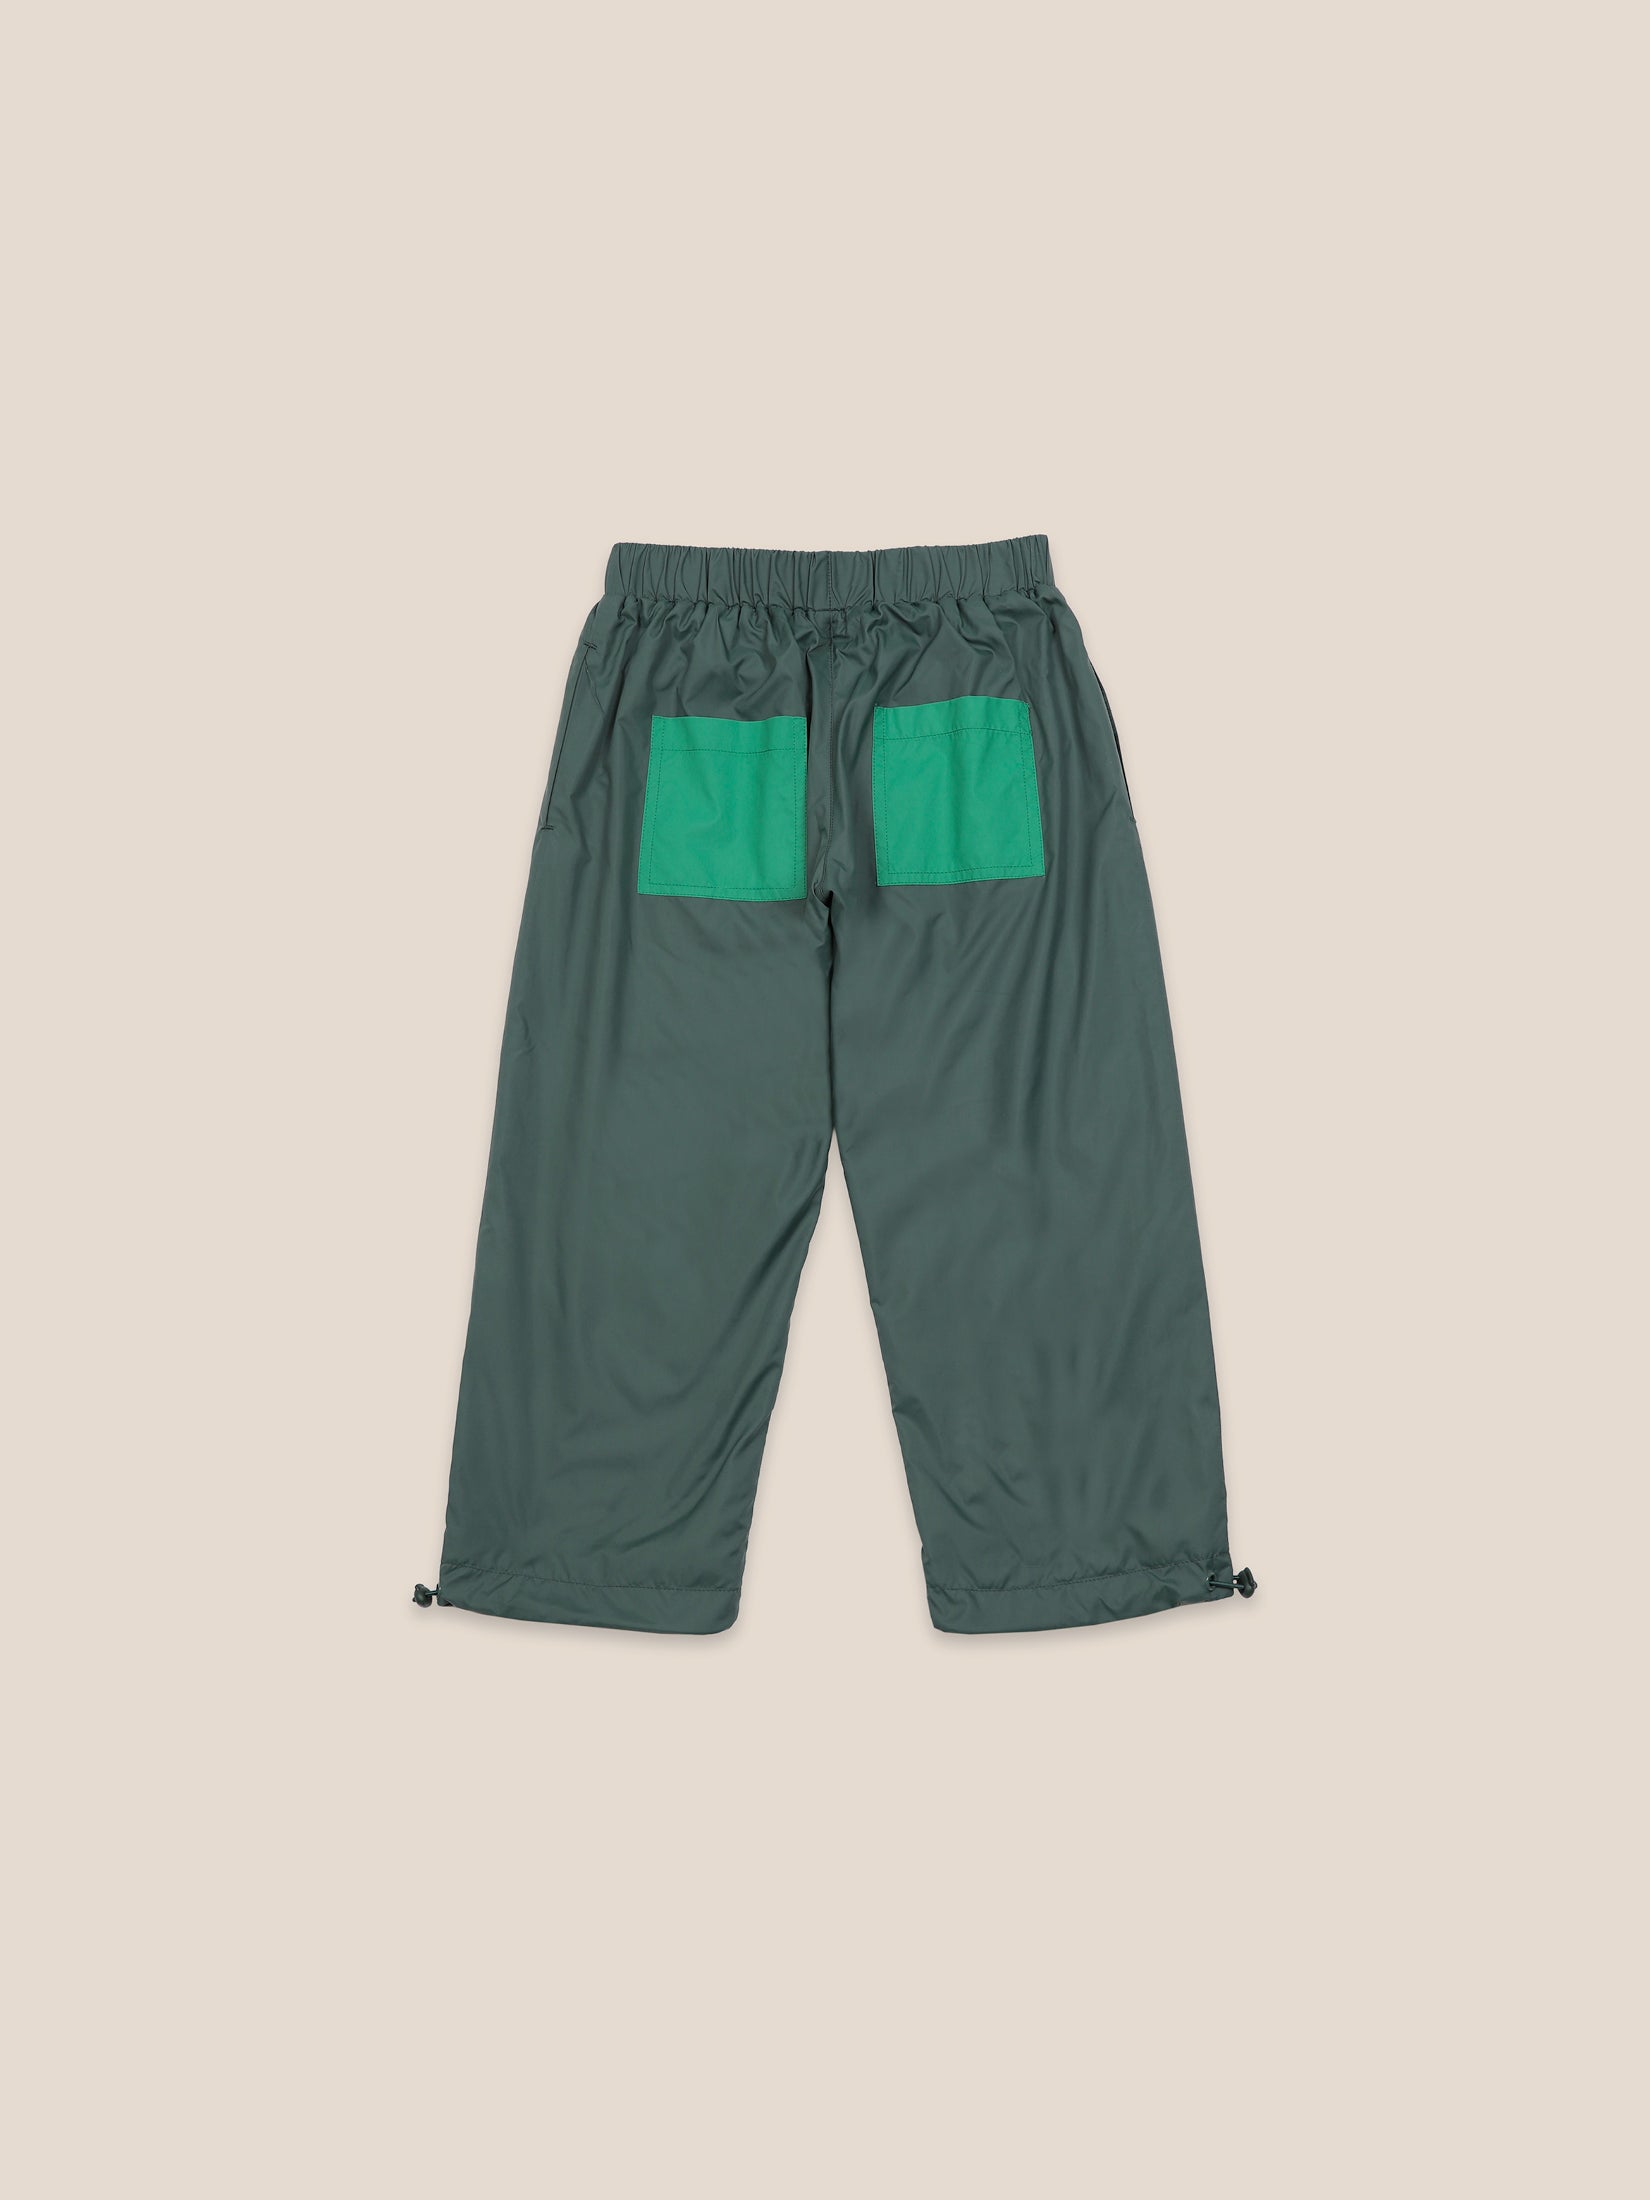 Boys Greener Pastures Outwear Pants